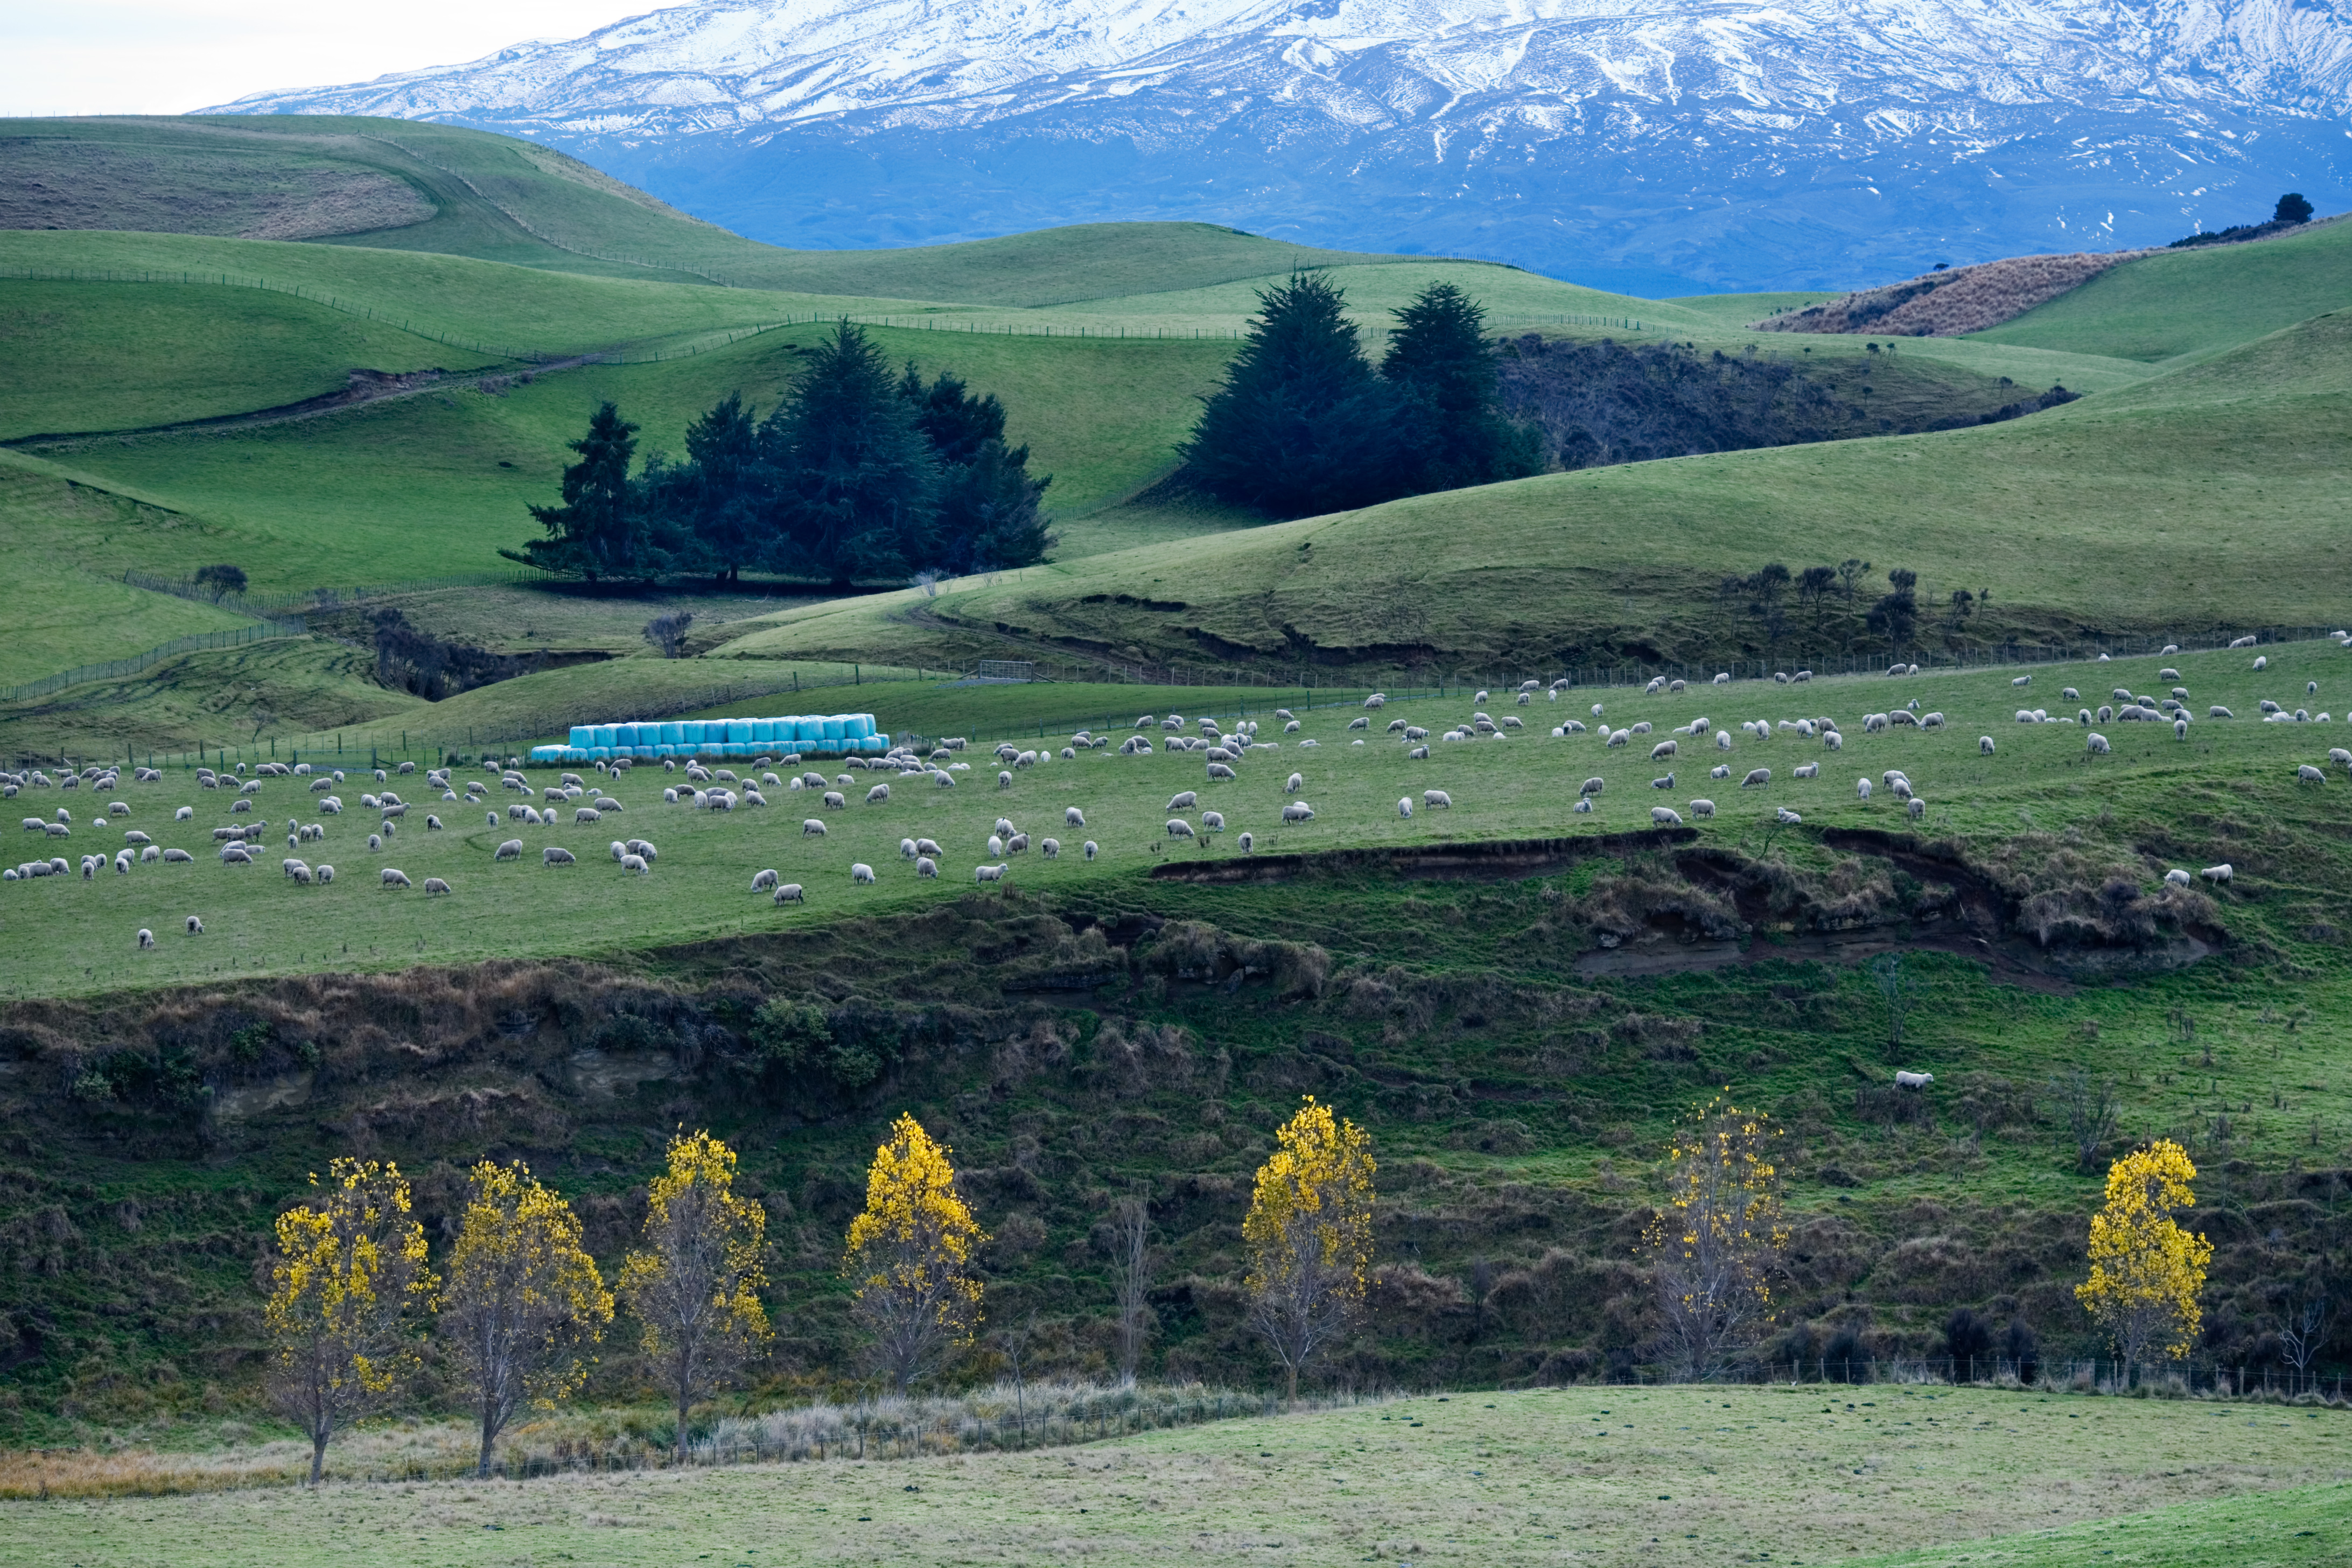 File:New Zealand - Landscape - 8674.jpg - Wikimedia Commons